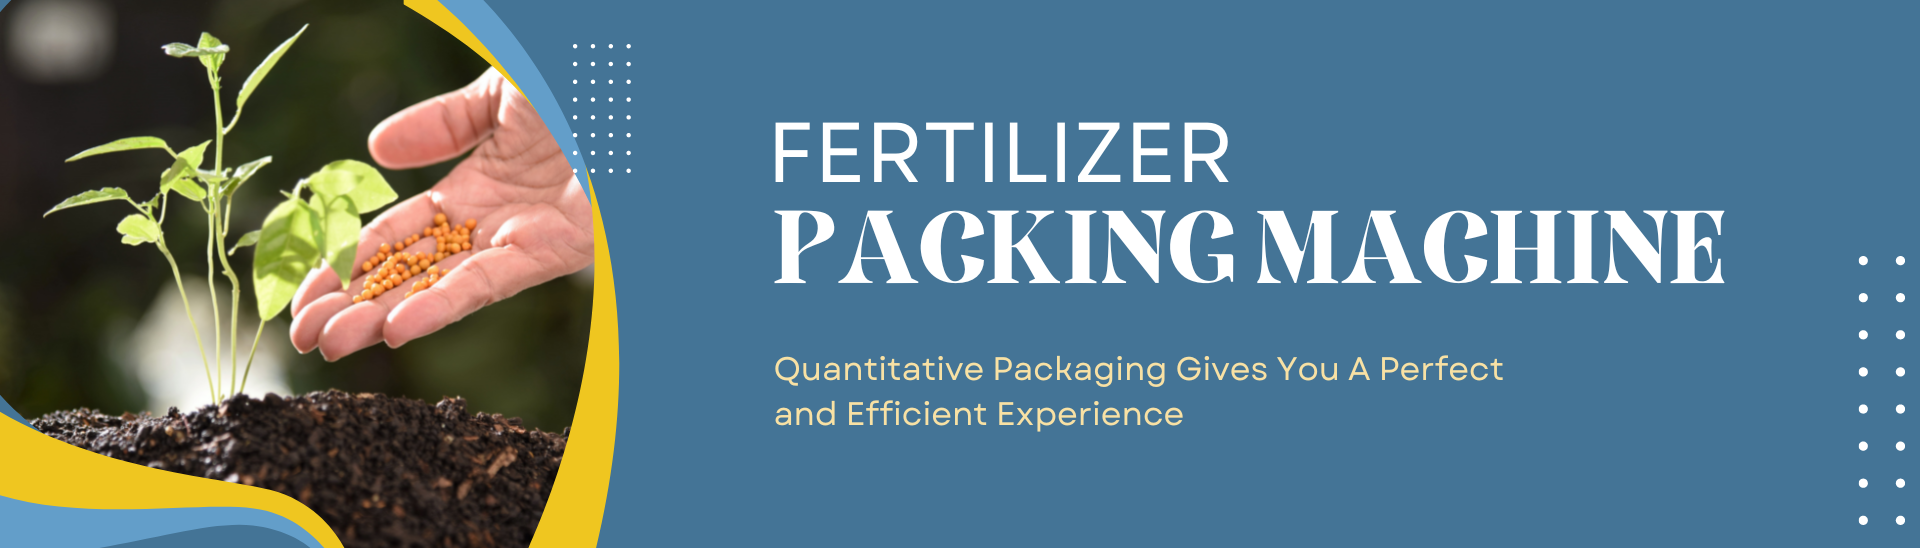 Fertilizer Packing Machine